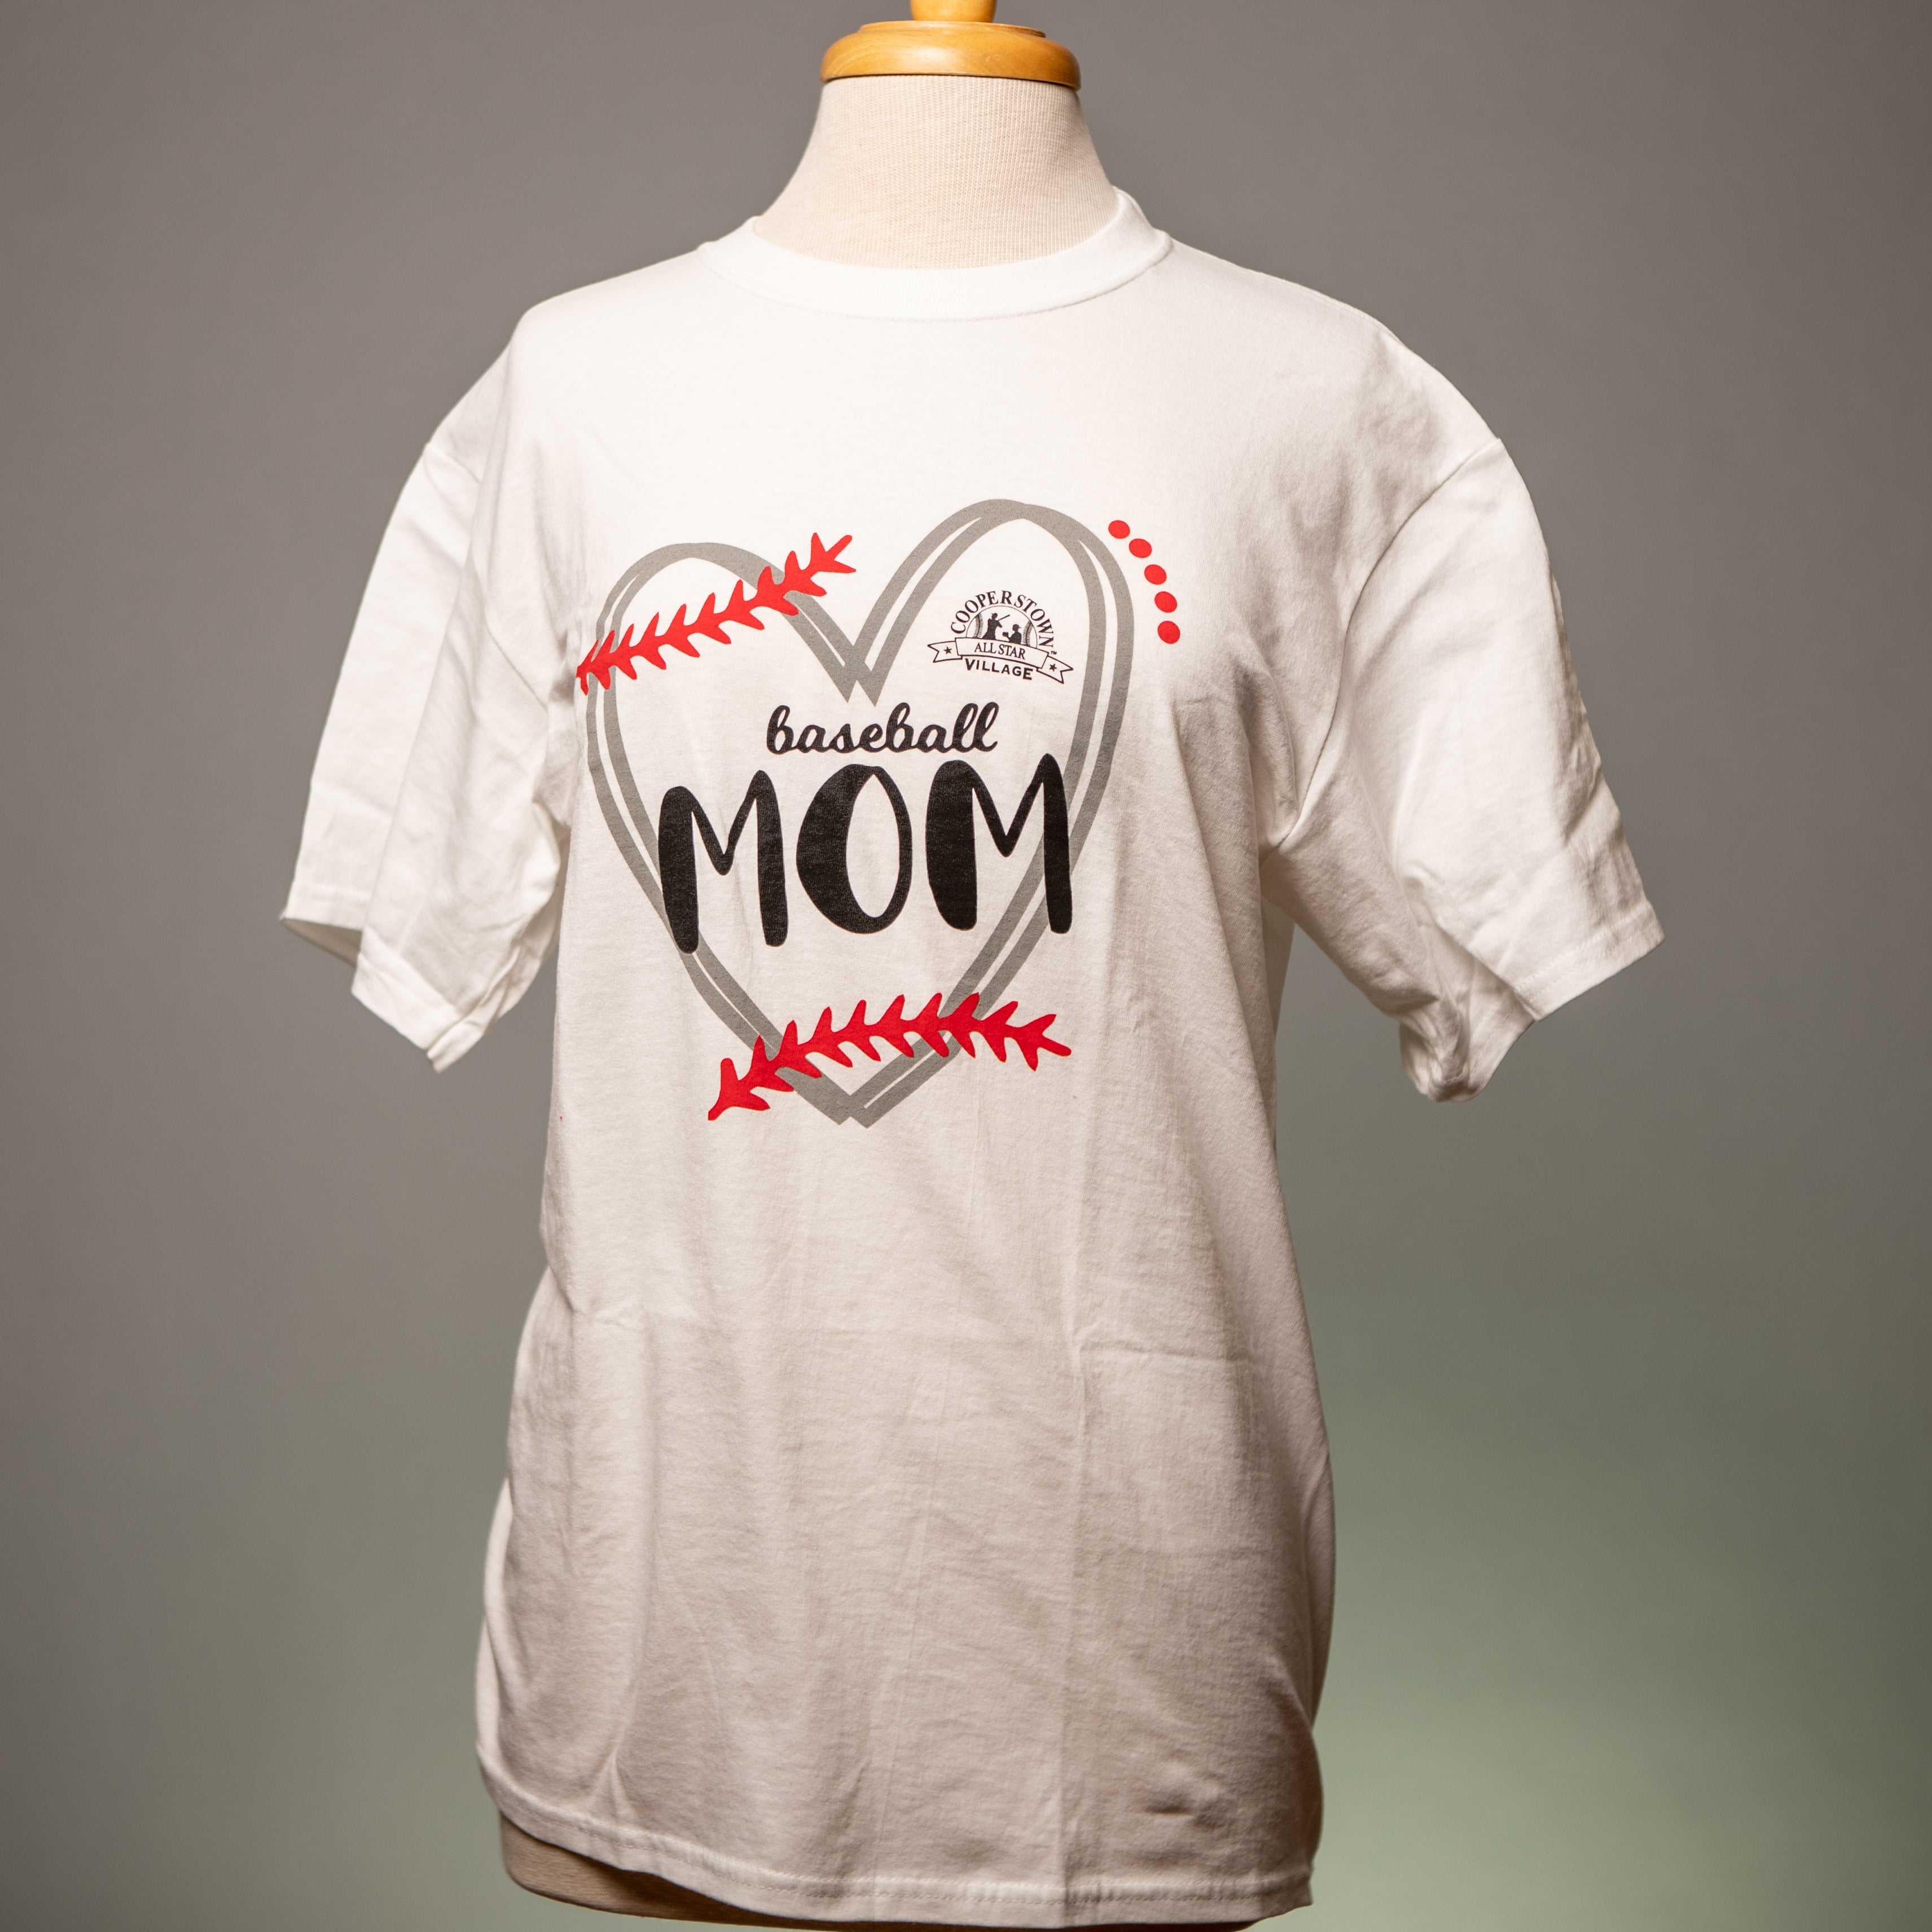 baseball mom shirts